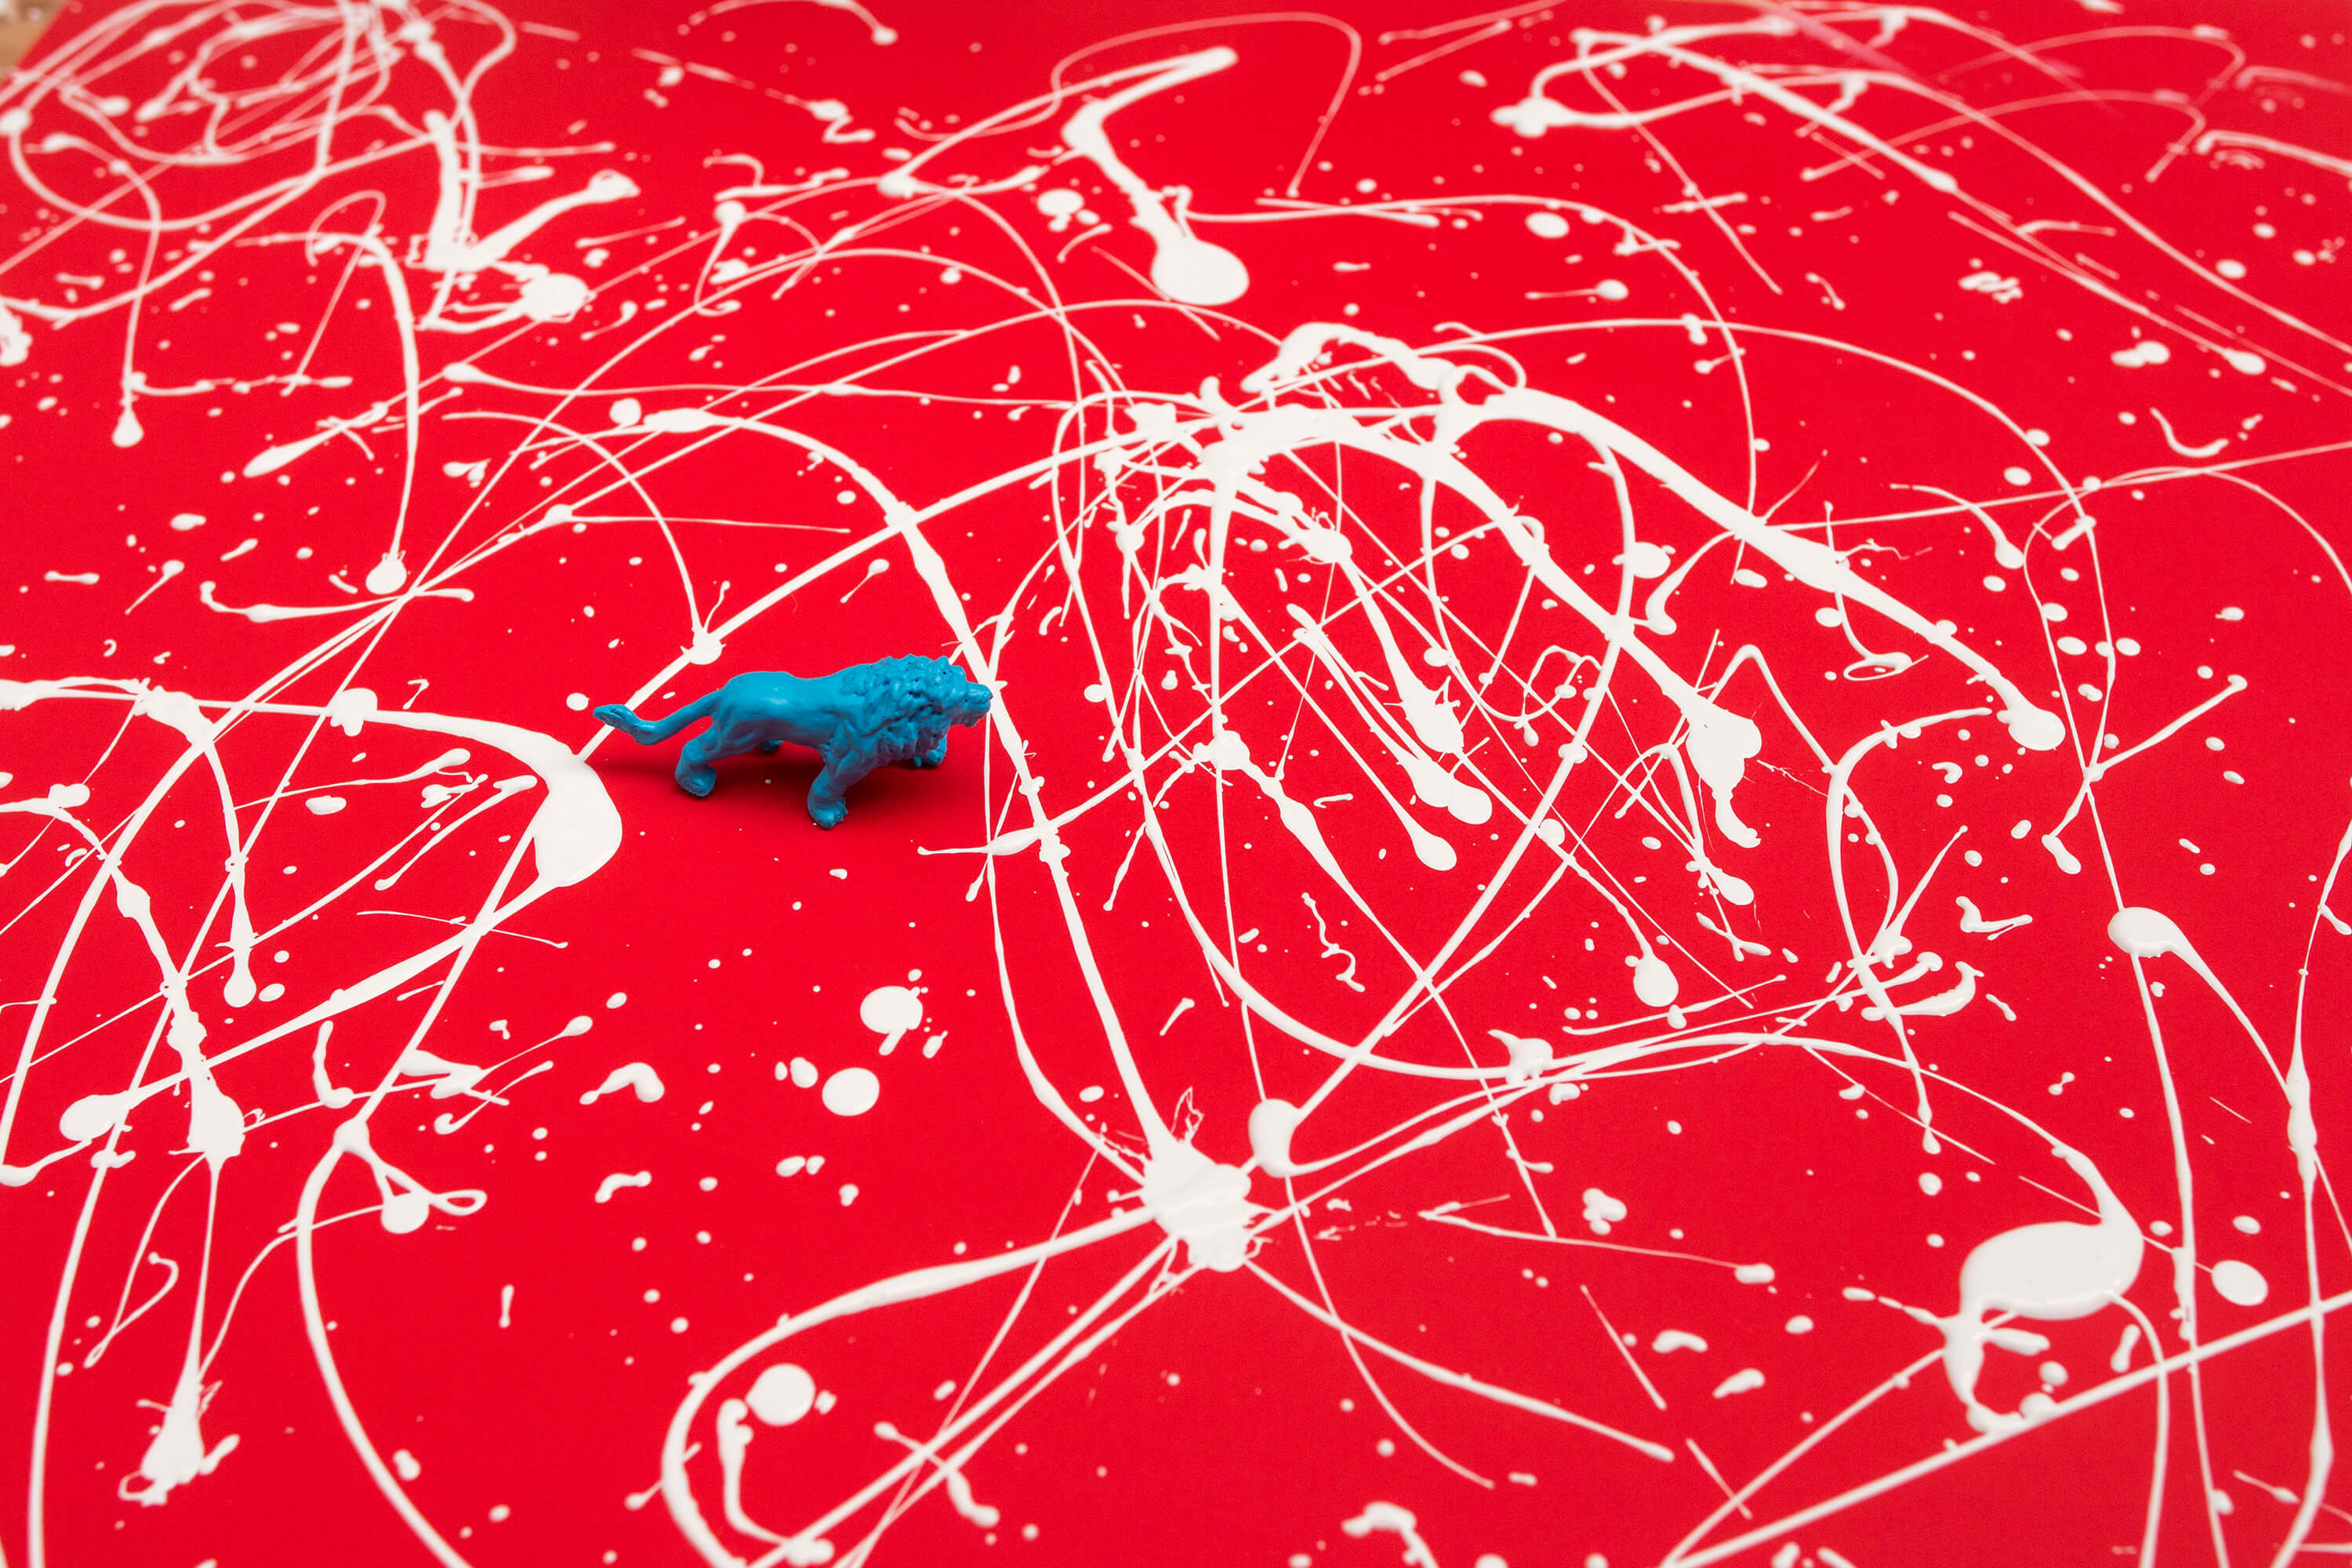 perception-gap-photo-blue-lion-on-red-table-01.jpg